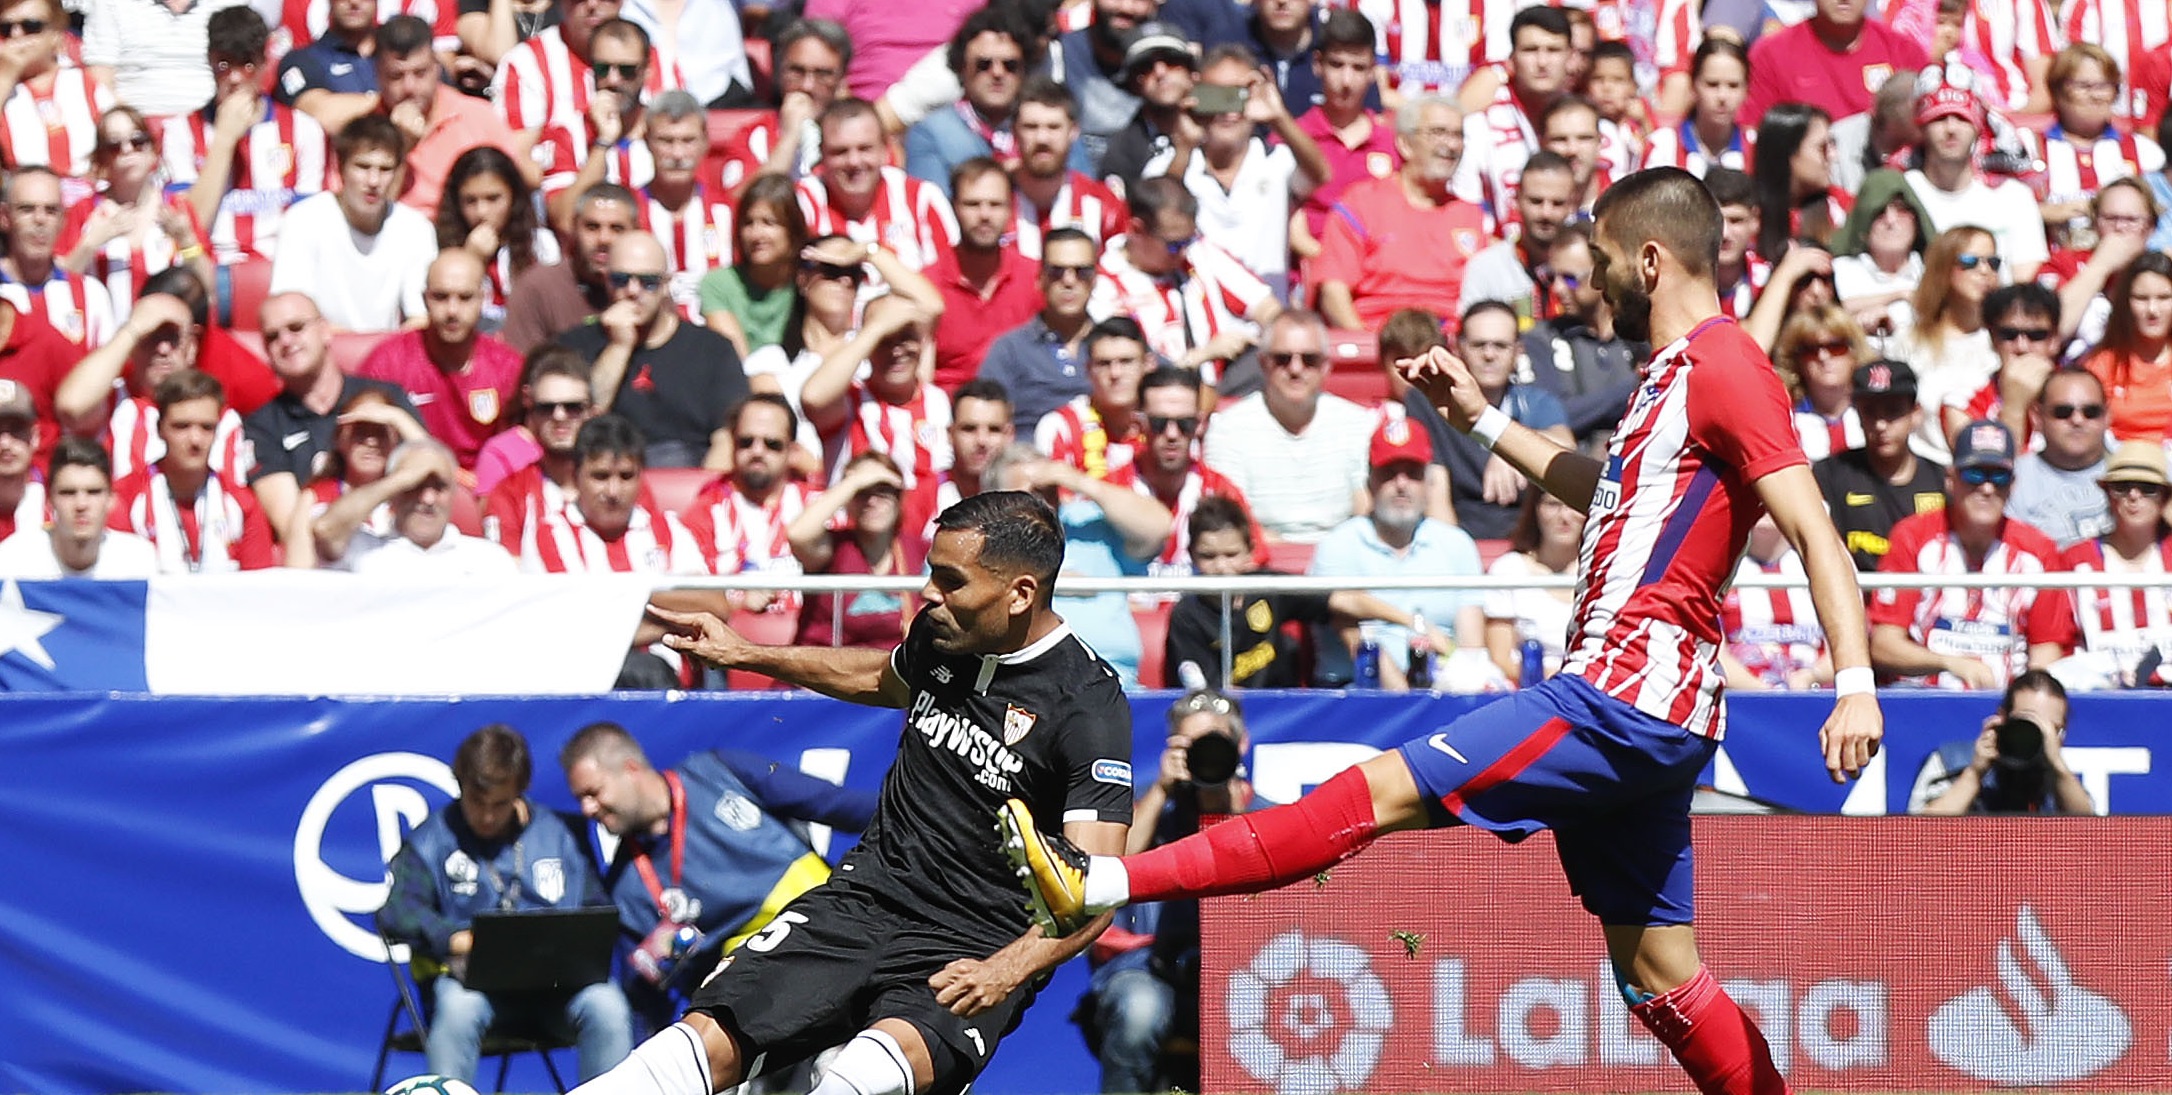 Mercado in action against Atlético Madrid